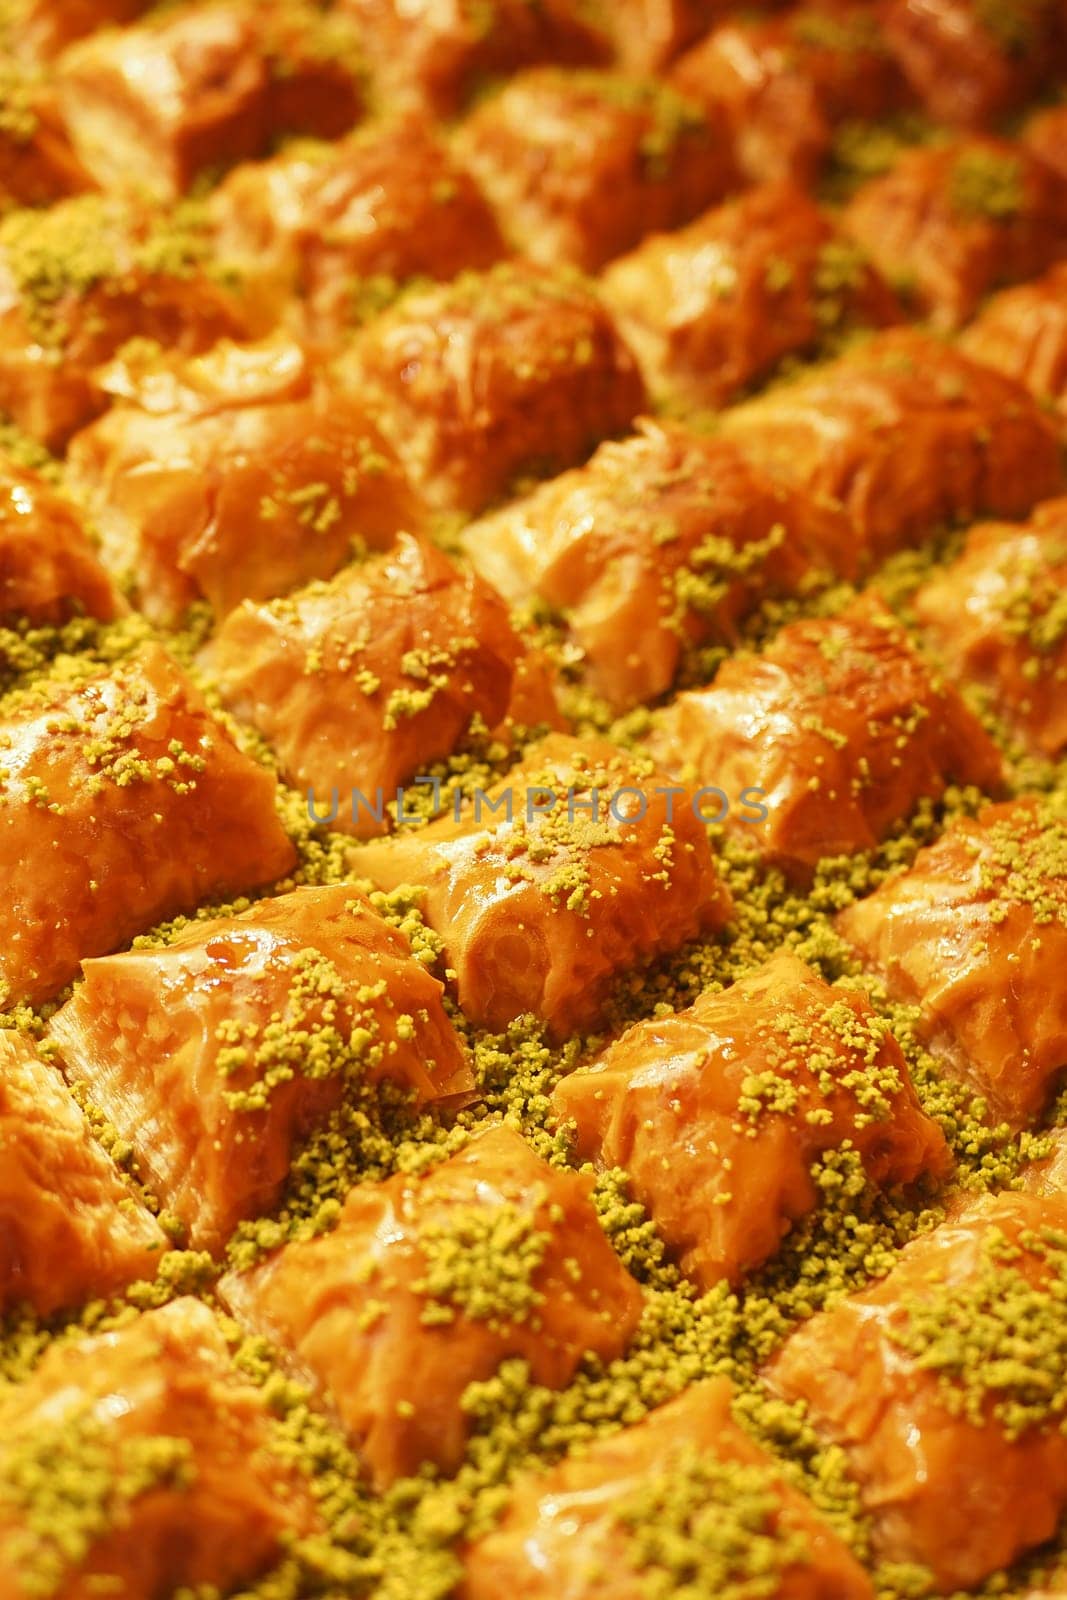 turkish dessert baklava selling at shop by towfiq007